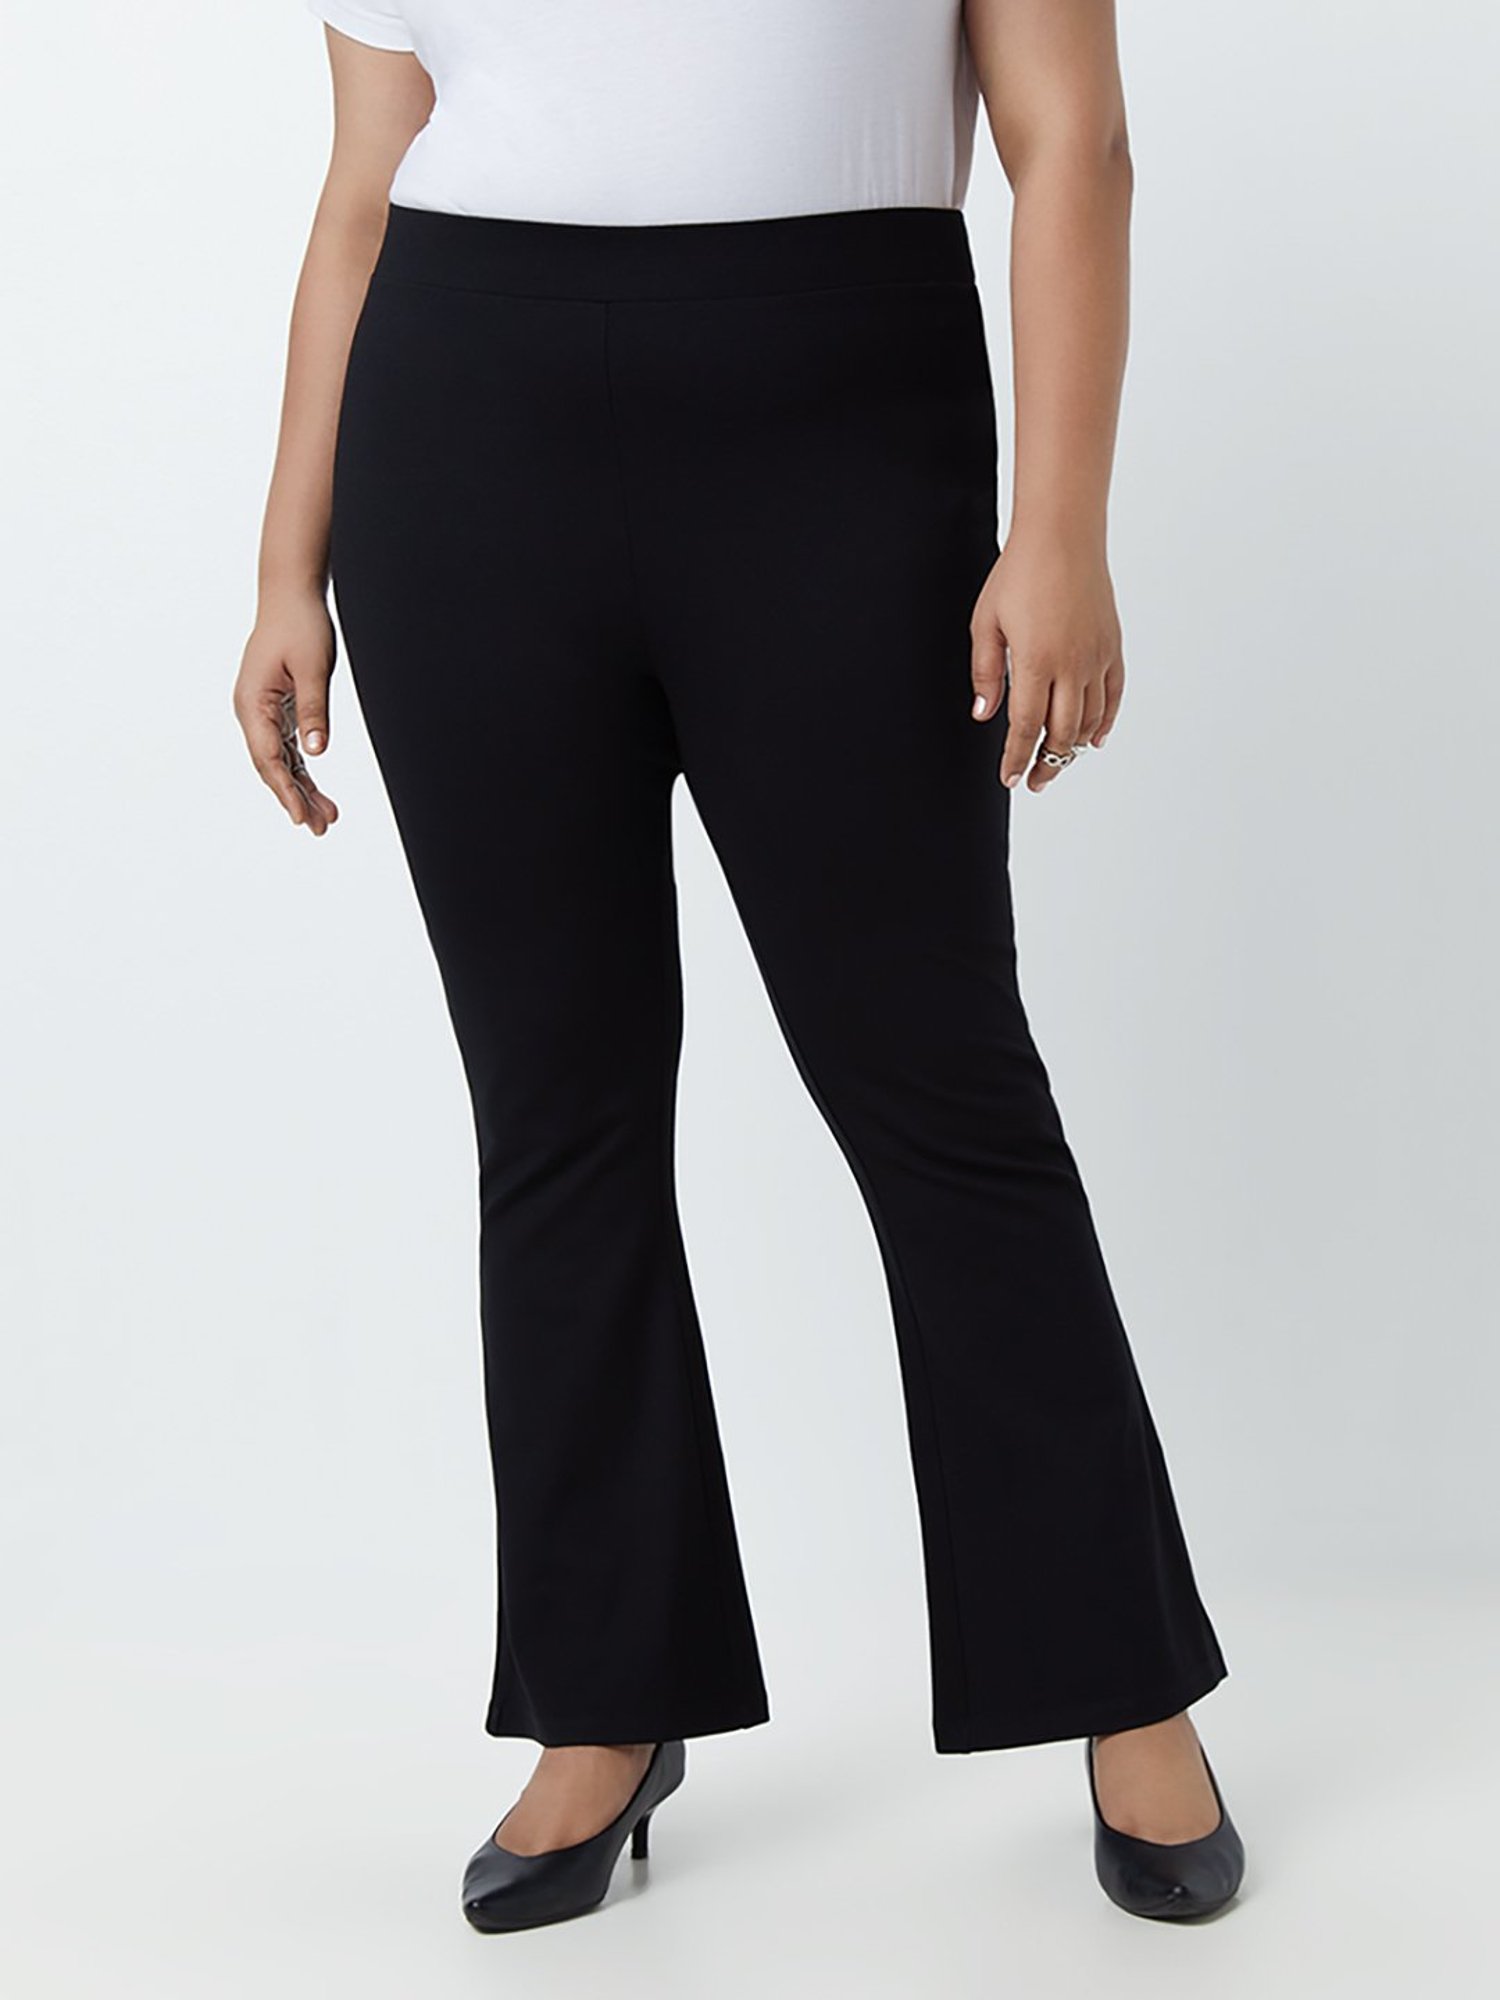 Plus Size Women's Black Pants Australia: Curve Black Pants | Taking Shape AU